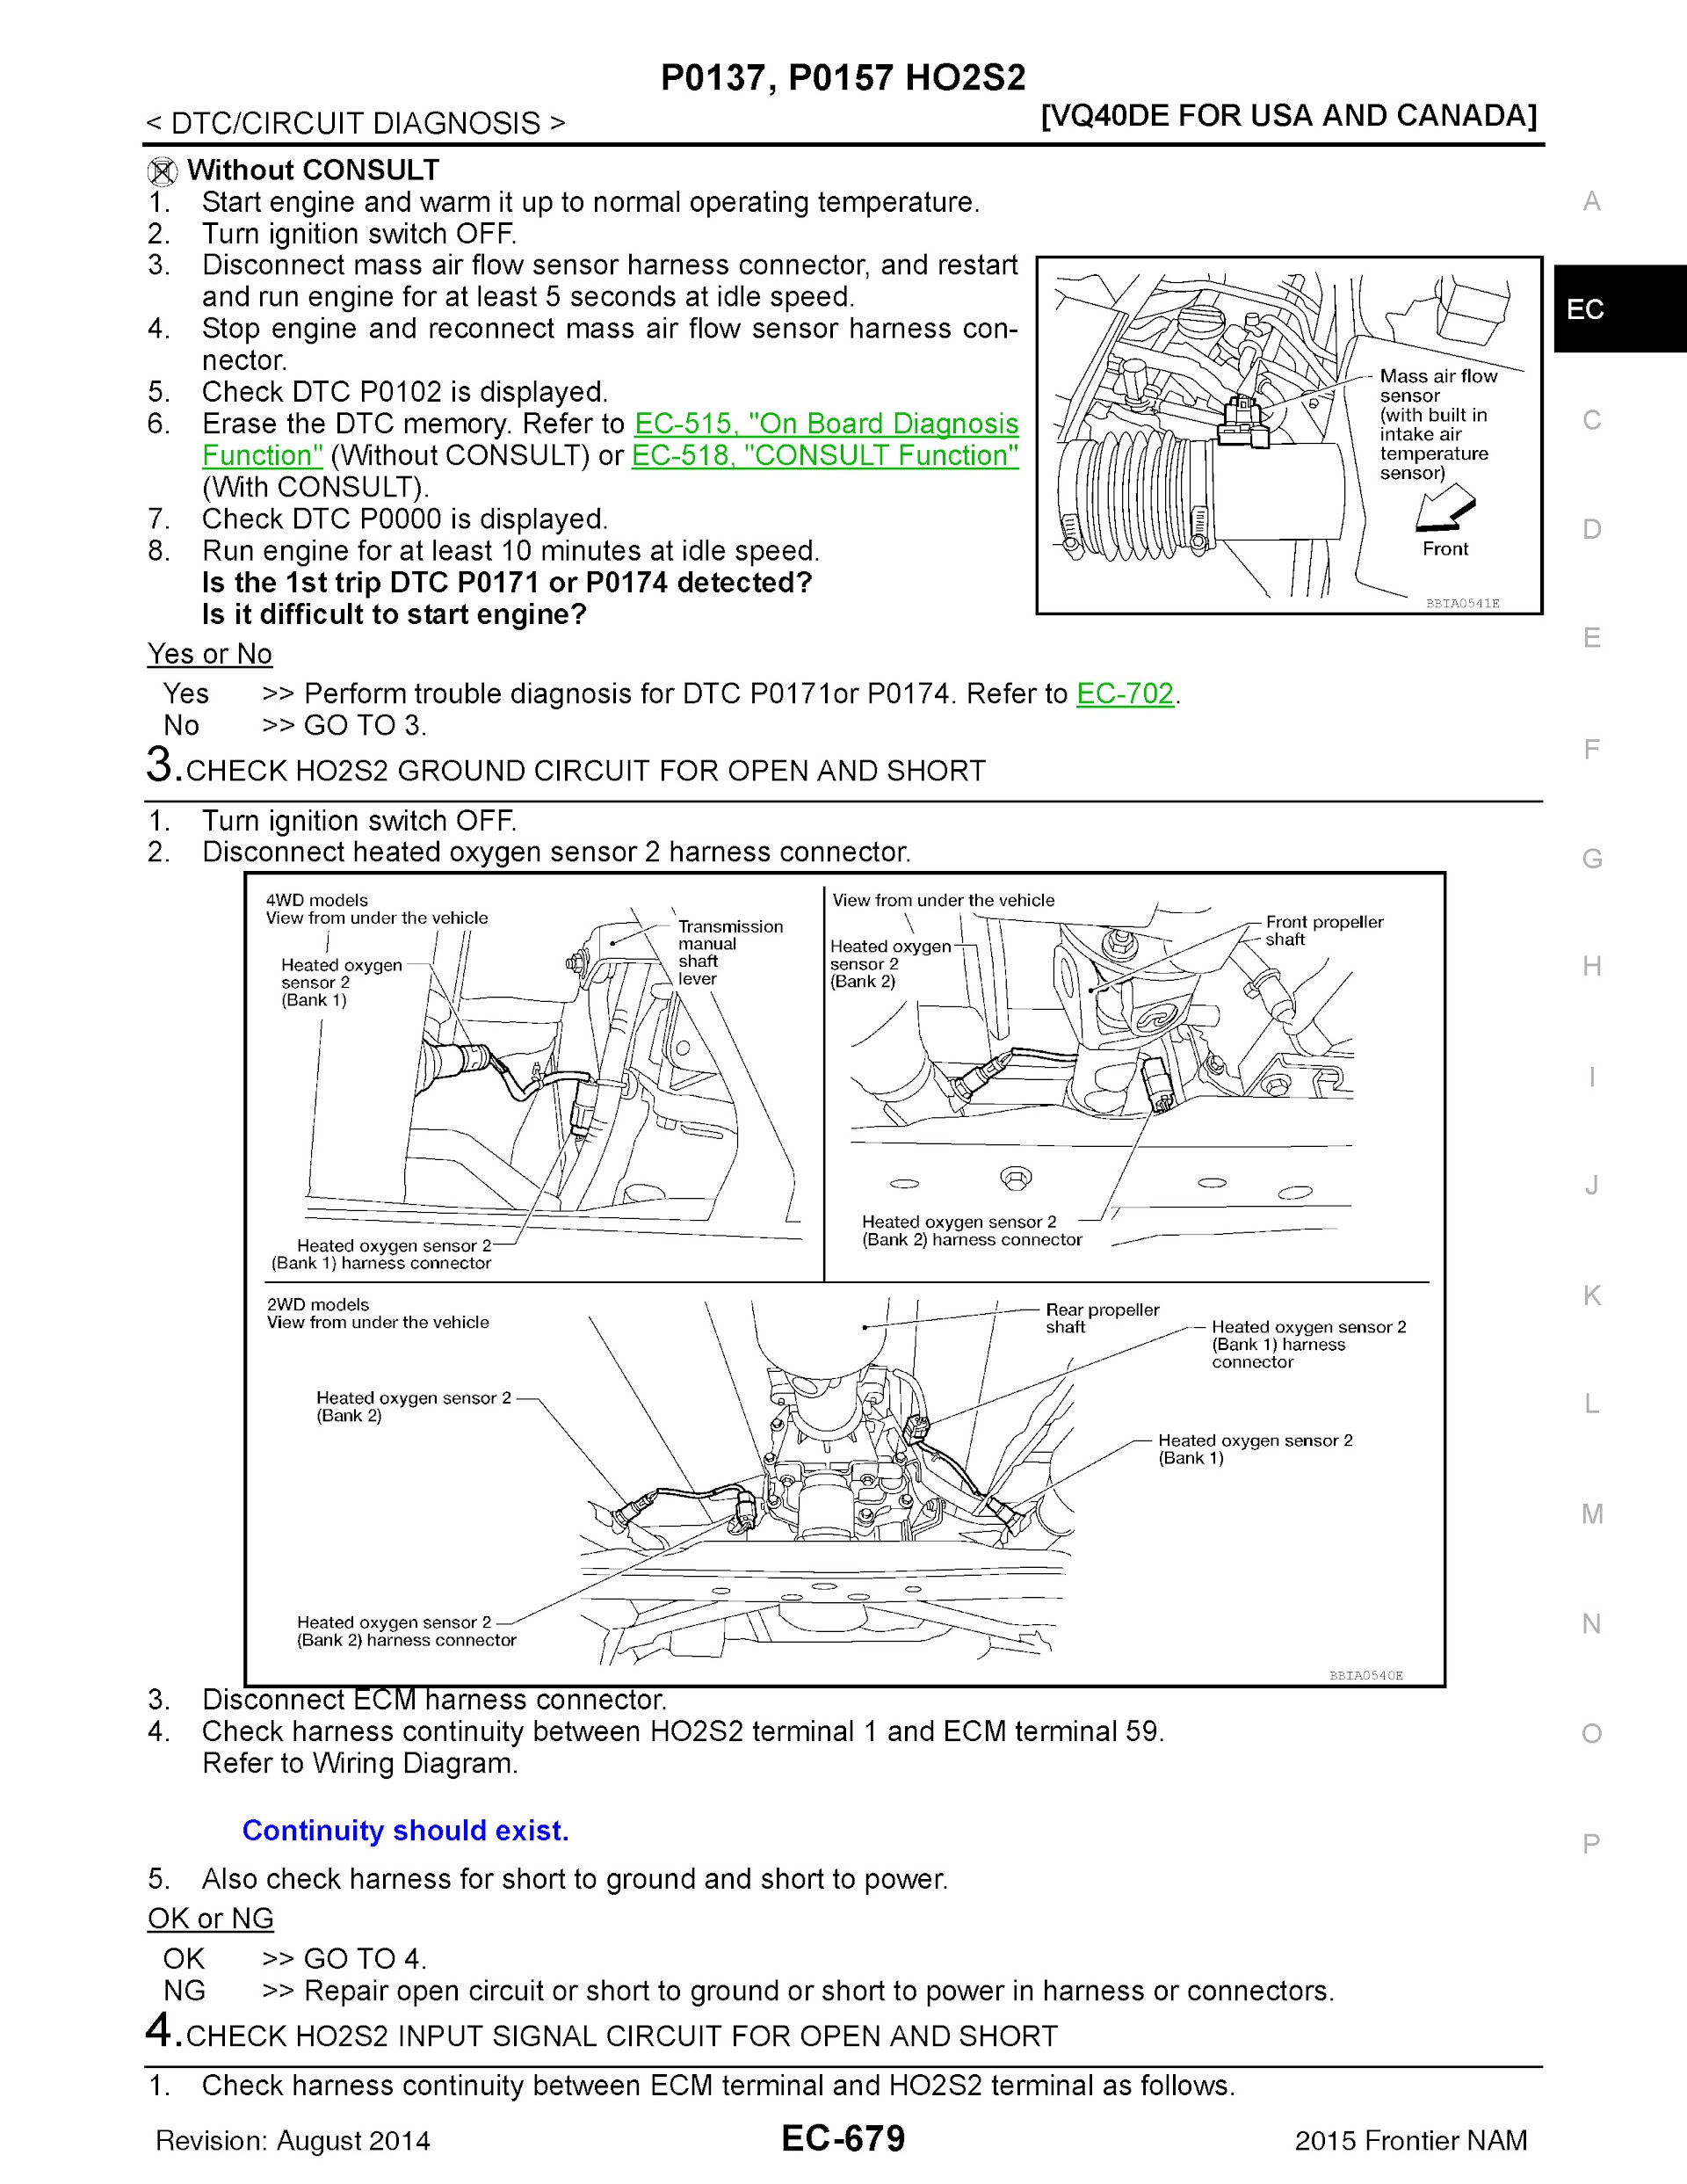 2015 Nissan Frontier Repair Manual, DTC Circuits Diagnosis